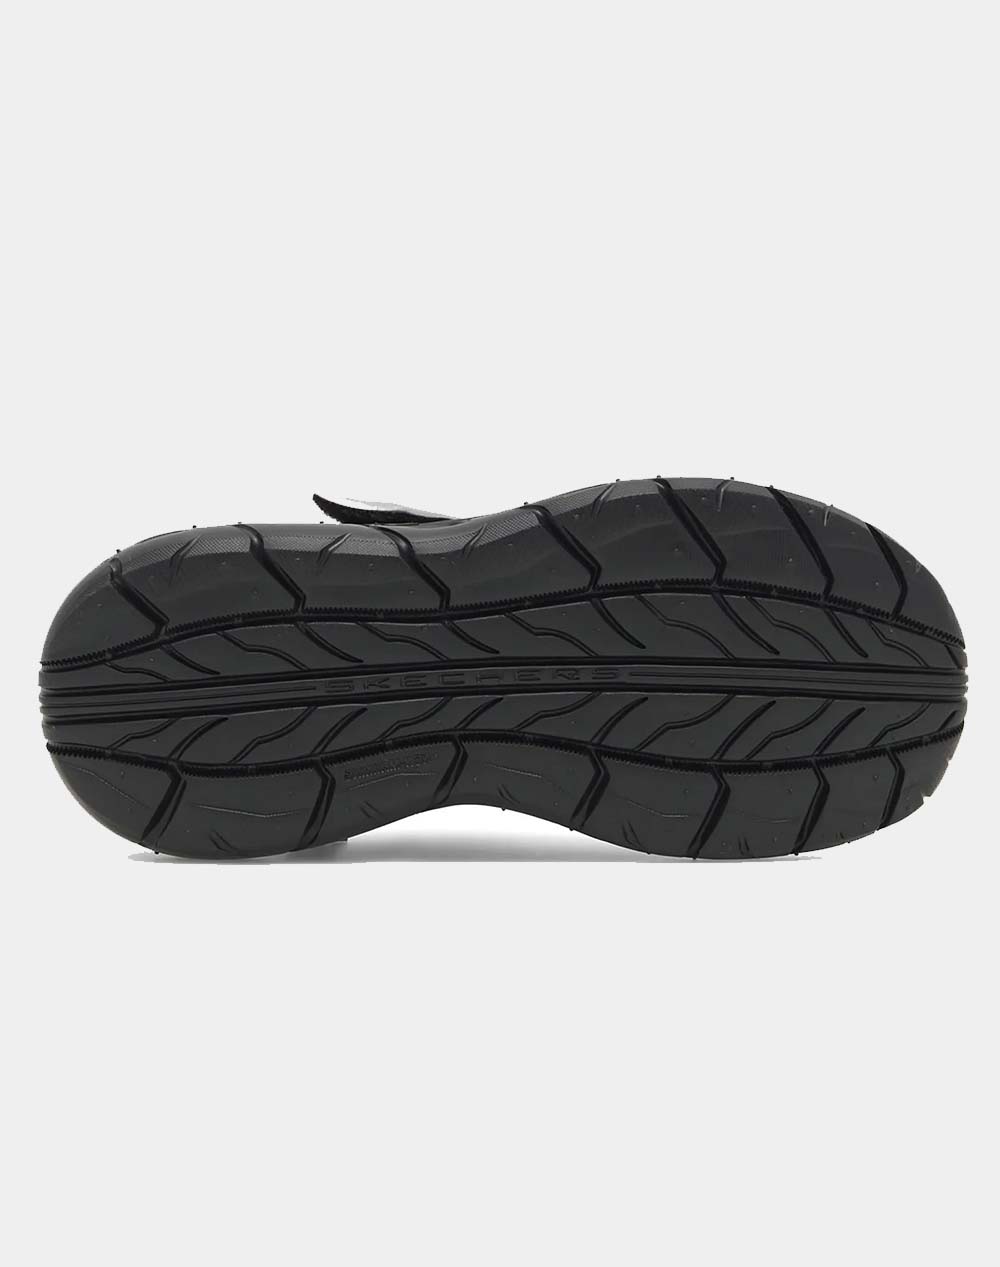 SKECHERS Gore & Strap Sneaker W/ Vehicle Details & Tire Outsole